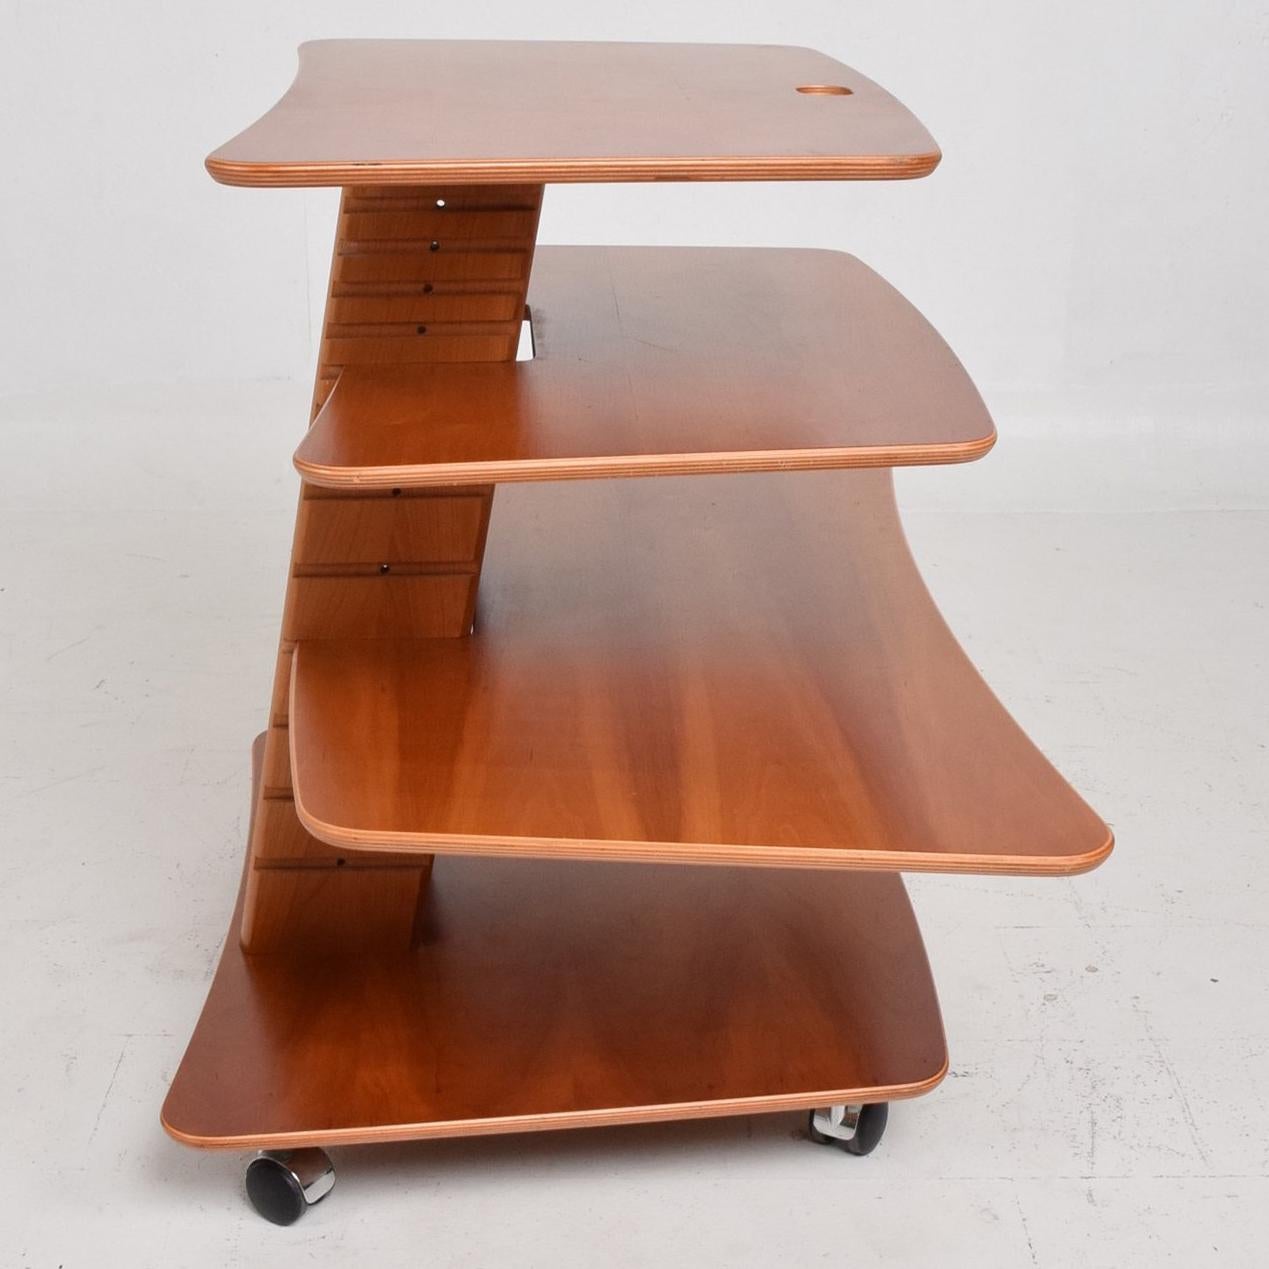 Late 20th Century Mid-Century Danish Modern Aksel Kjesgaard Book Stand Table Desk